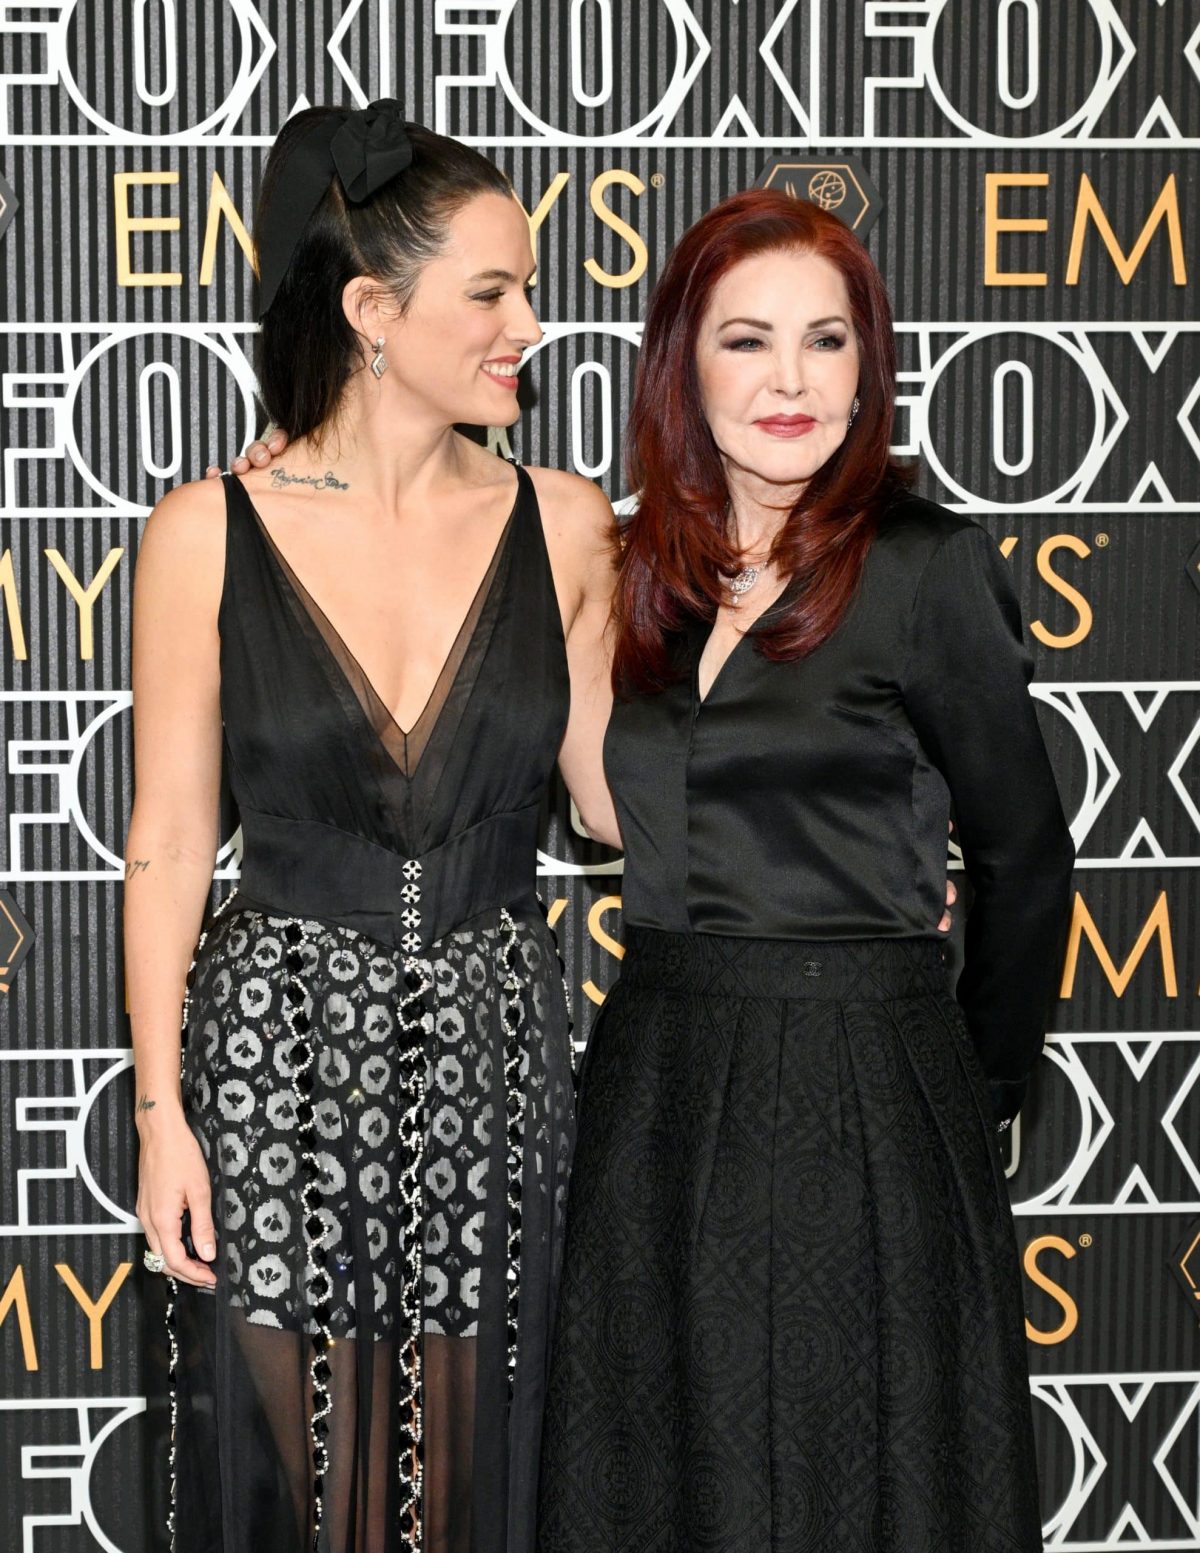 Riley Keough and Priscilla Presley attend the Primetime Emmy Awards